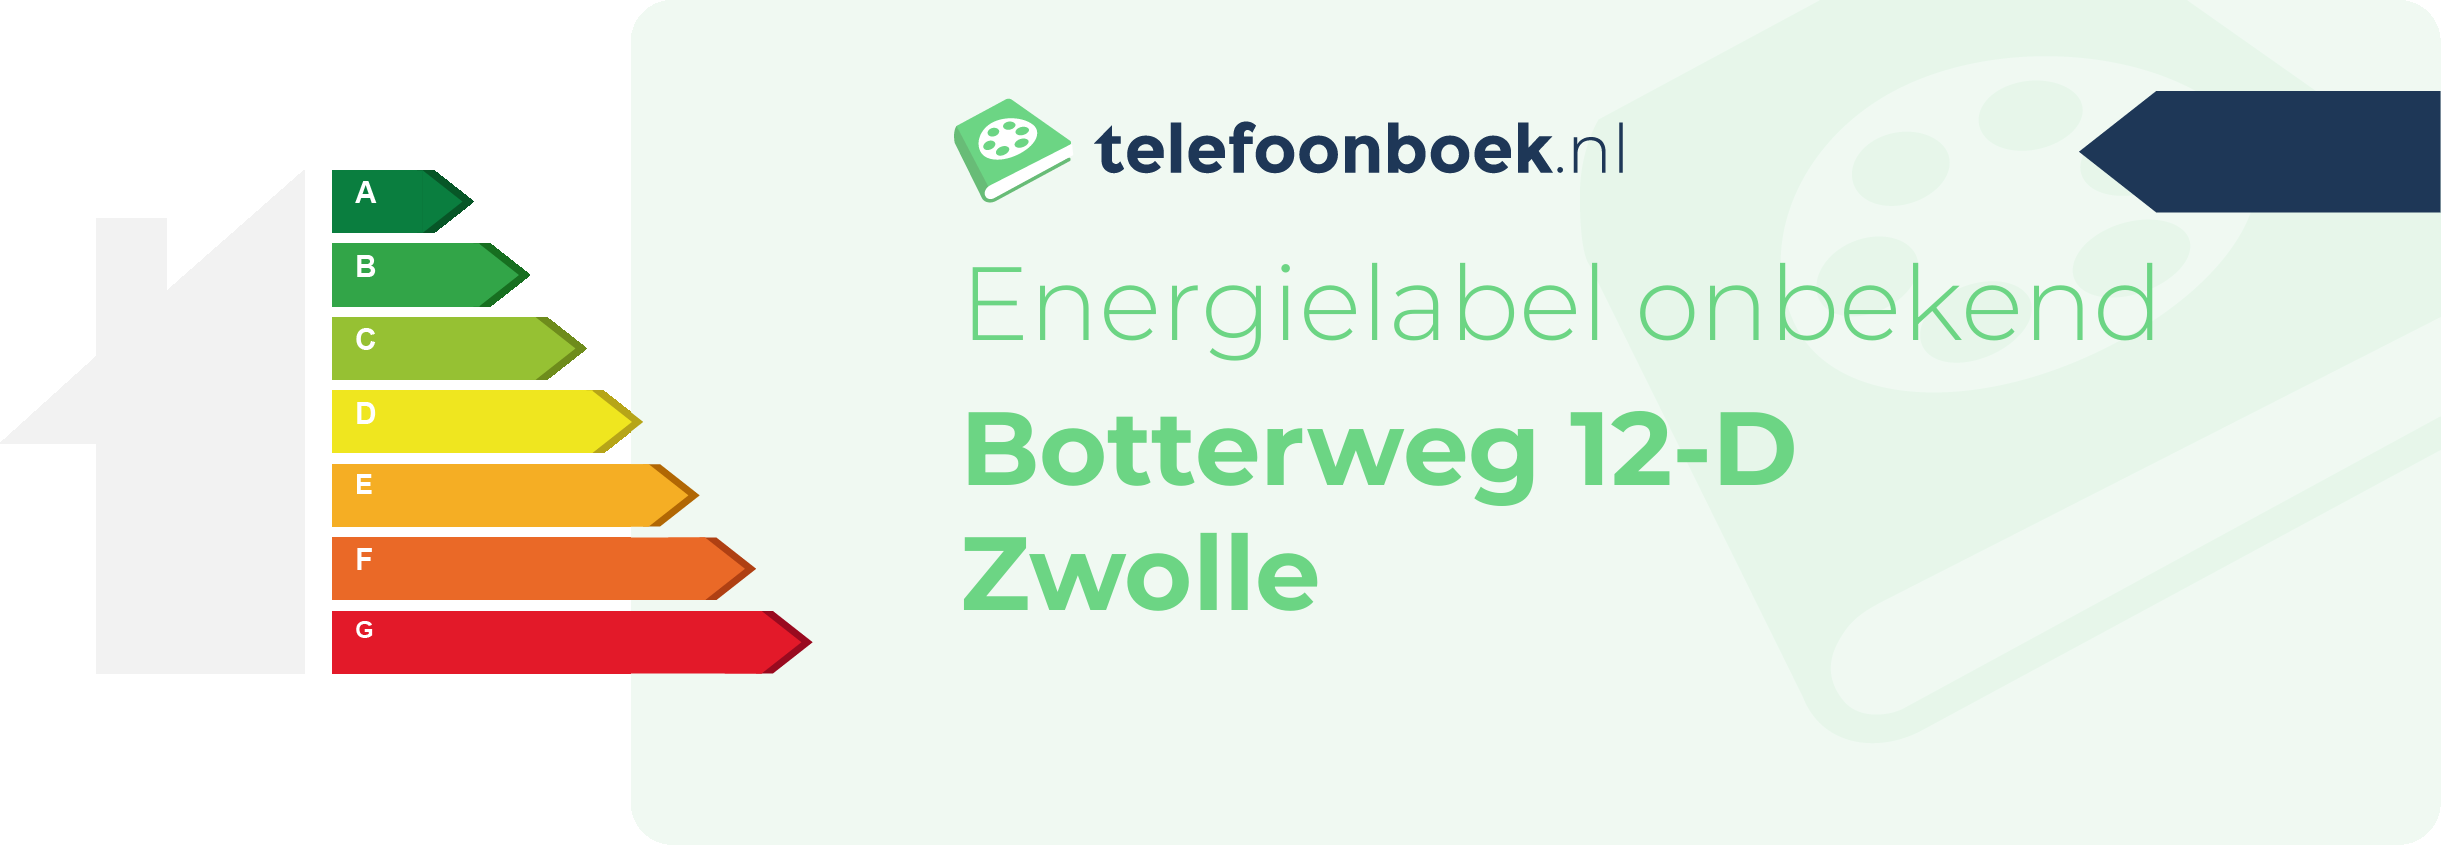 Energielabel Botterweg 12-D Zwolle